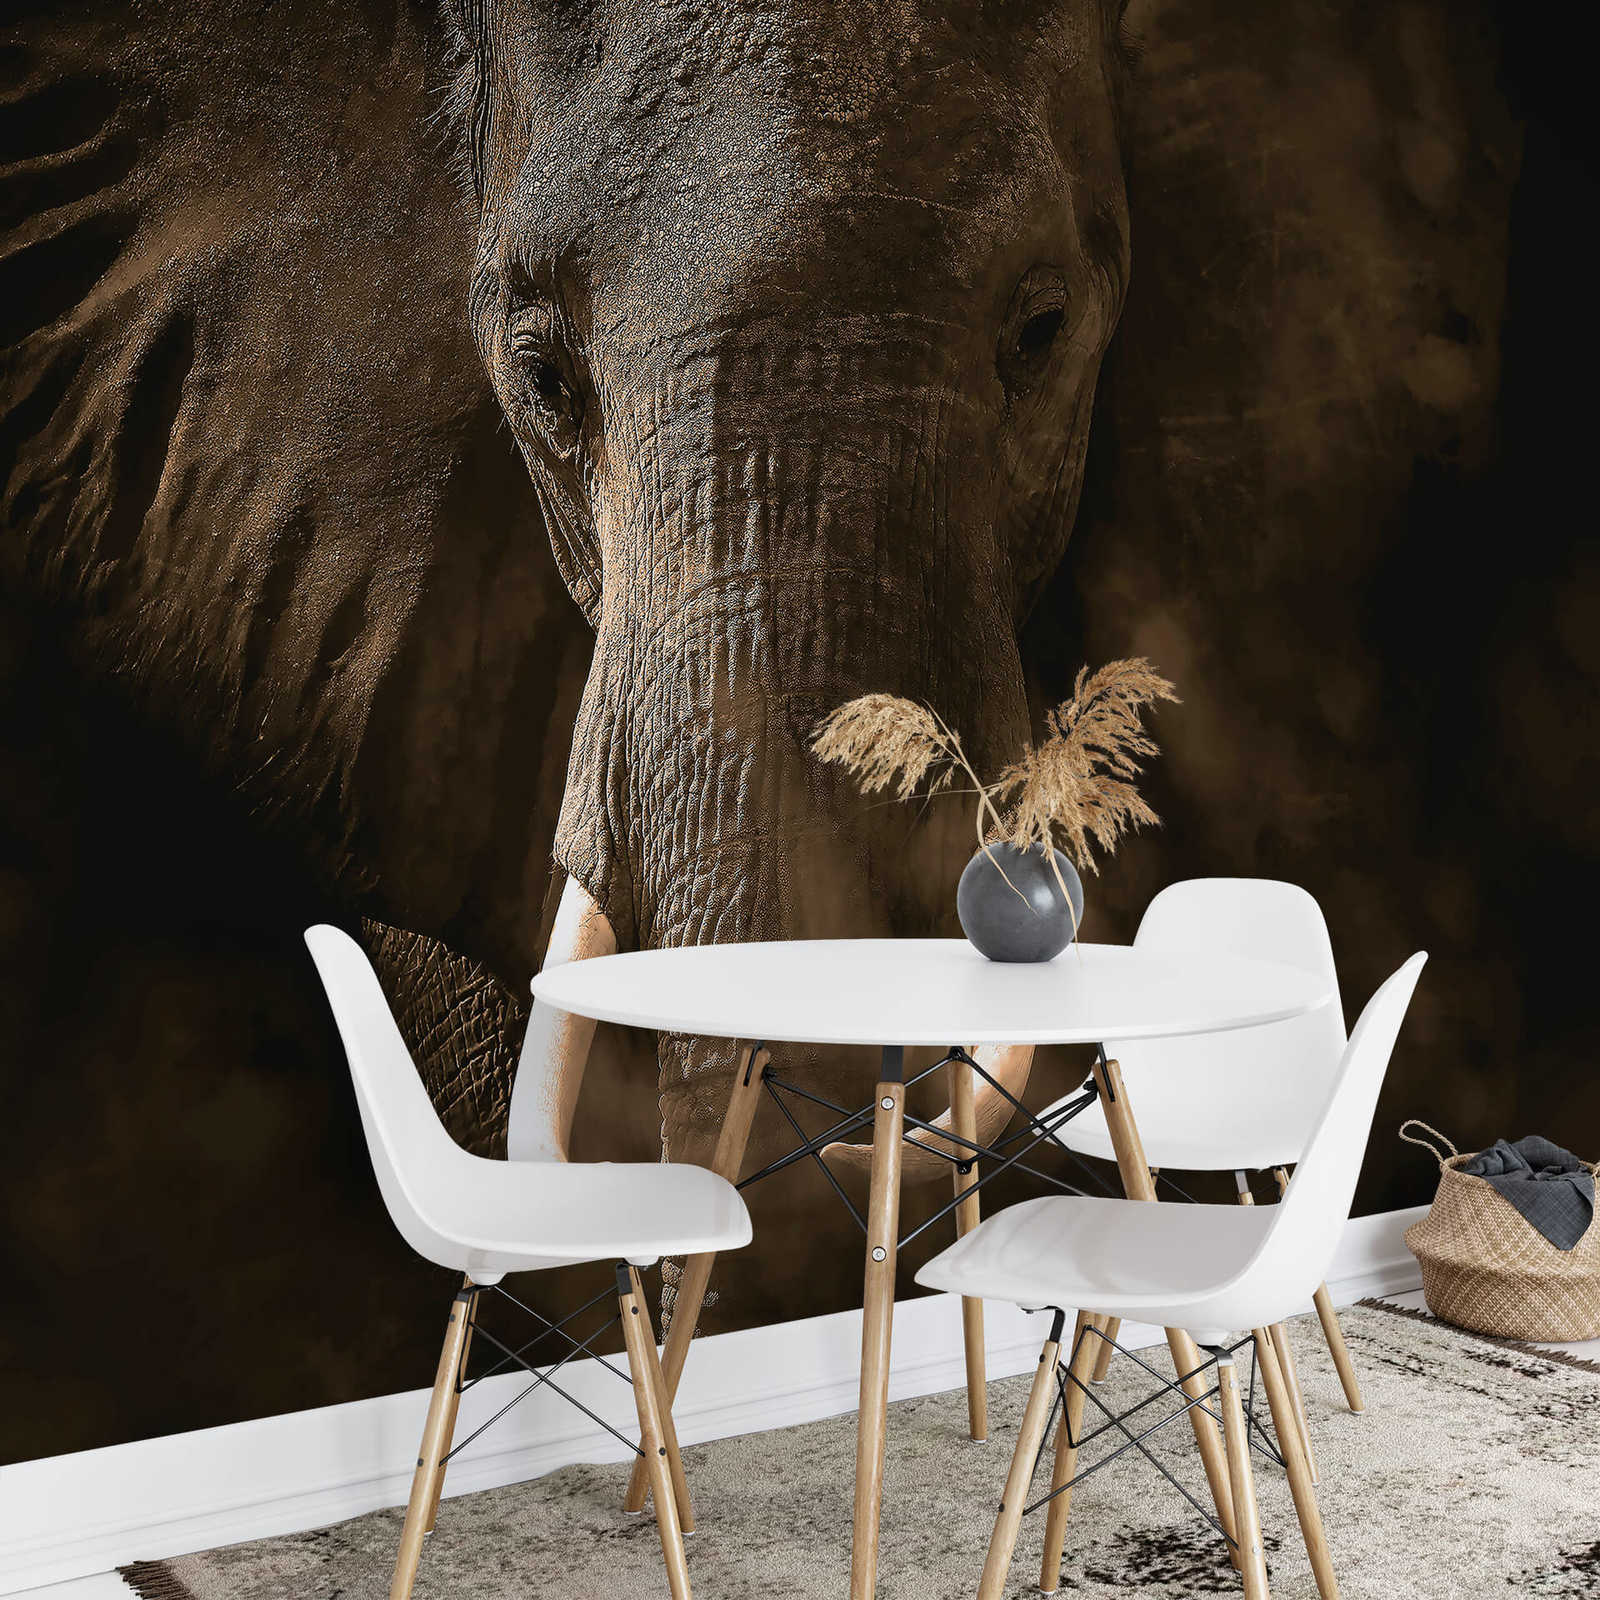             Papier peint Safari animal éléphant - gris, marron, blanc
        